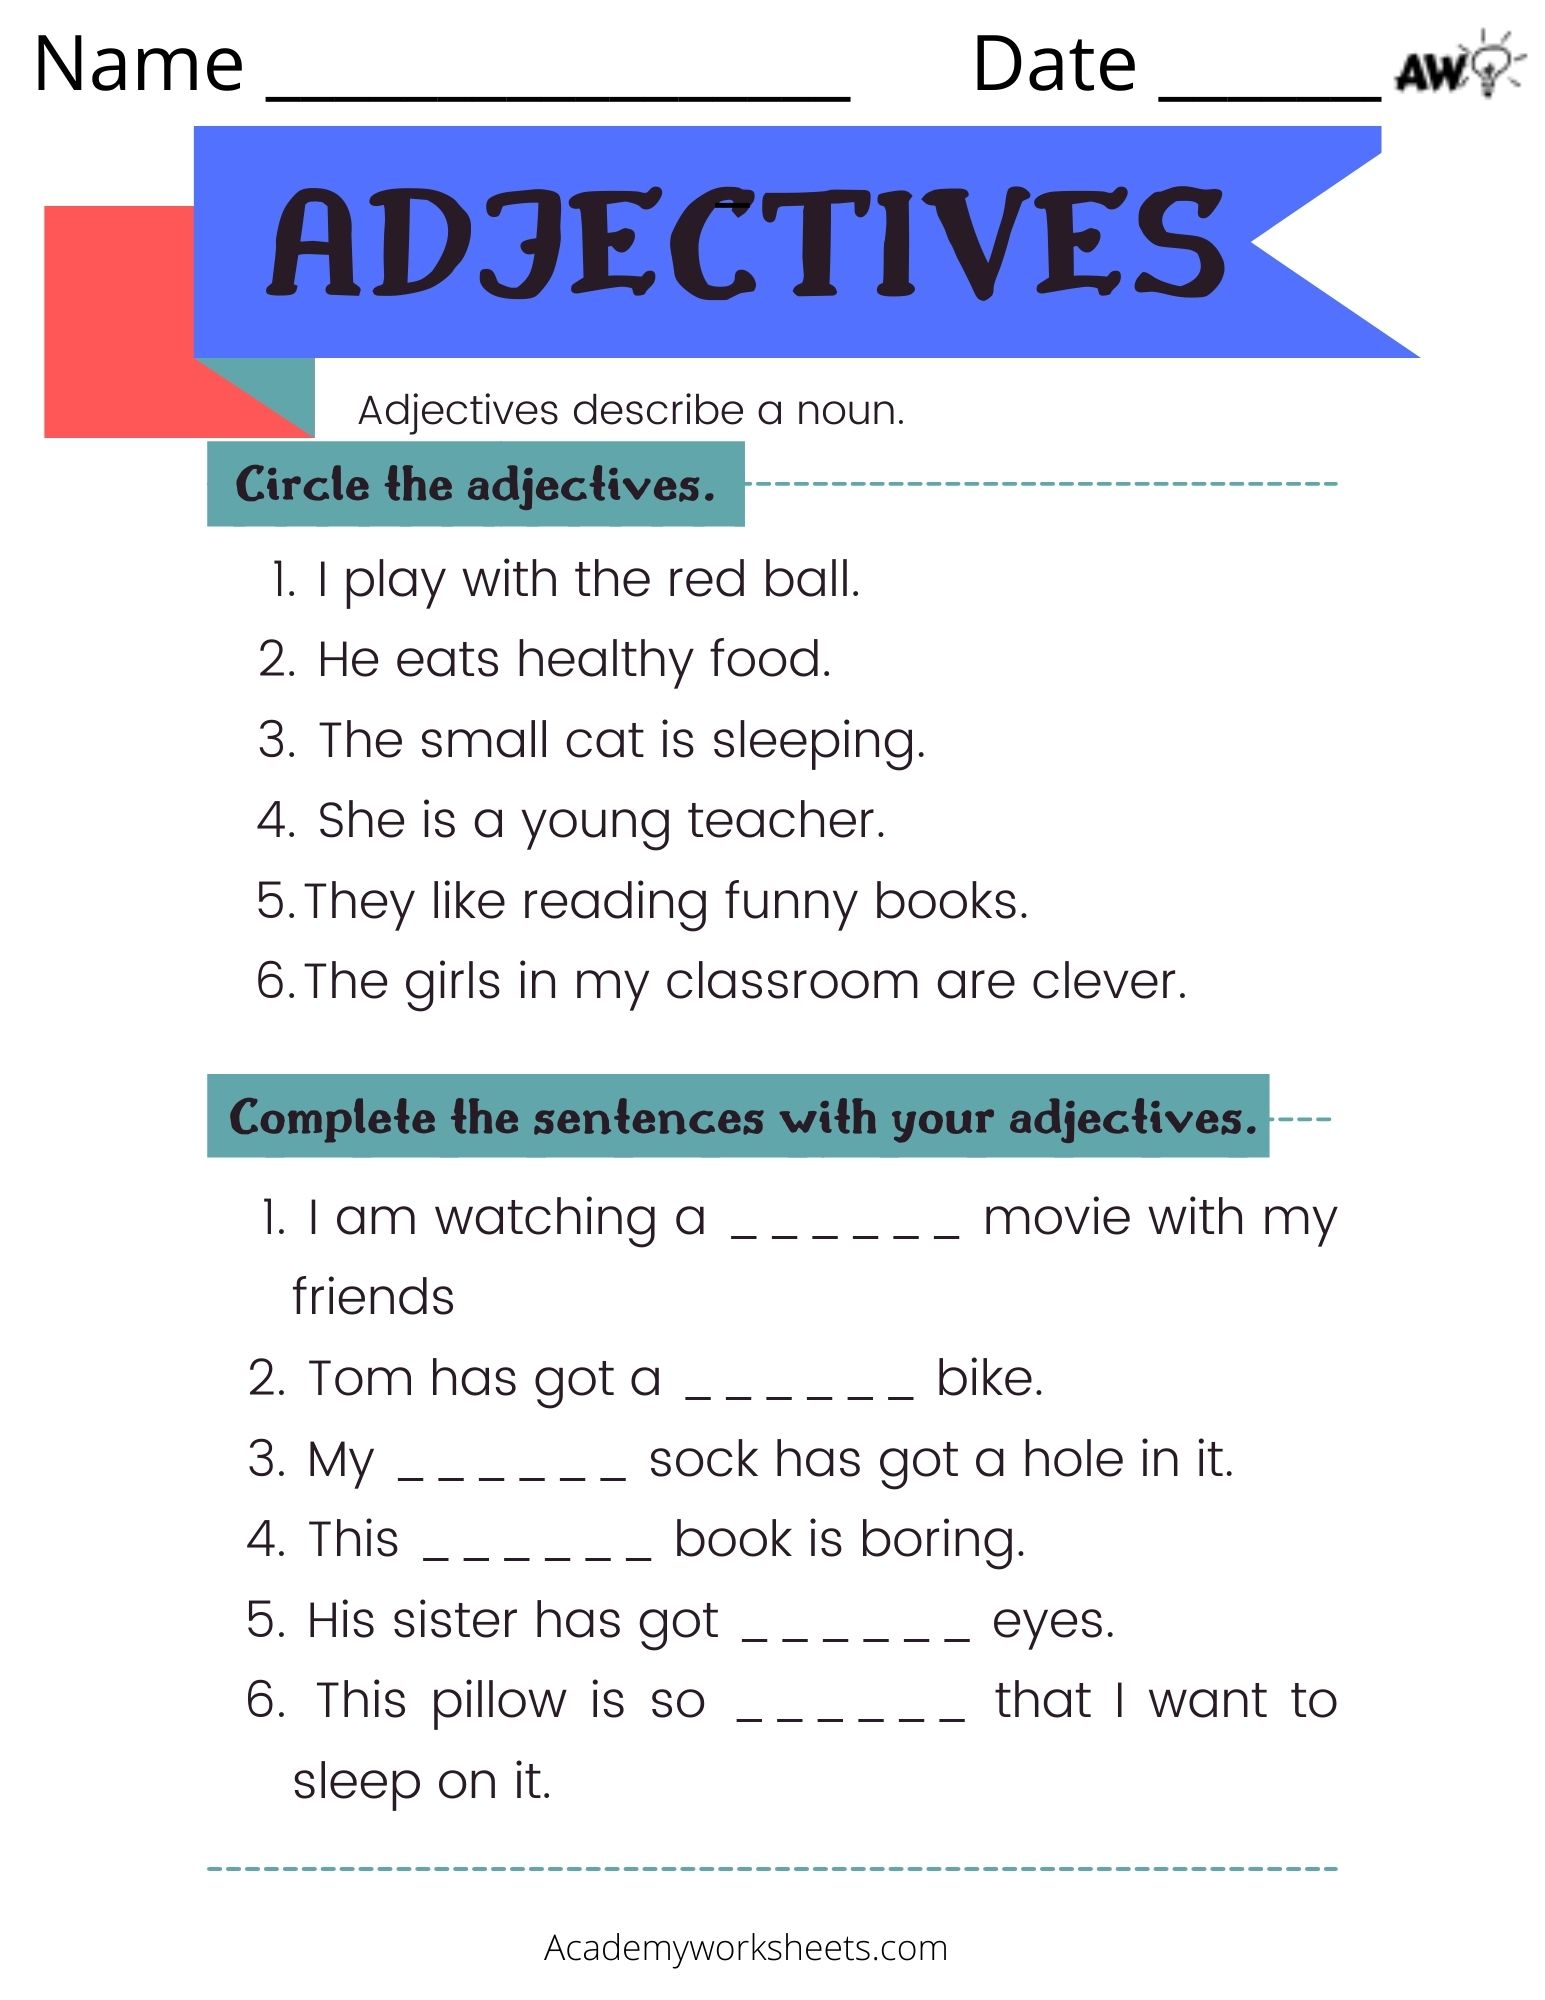 adjectives-worksheet-academy-worksheets